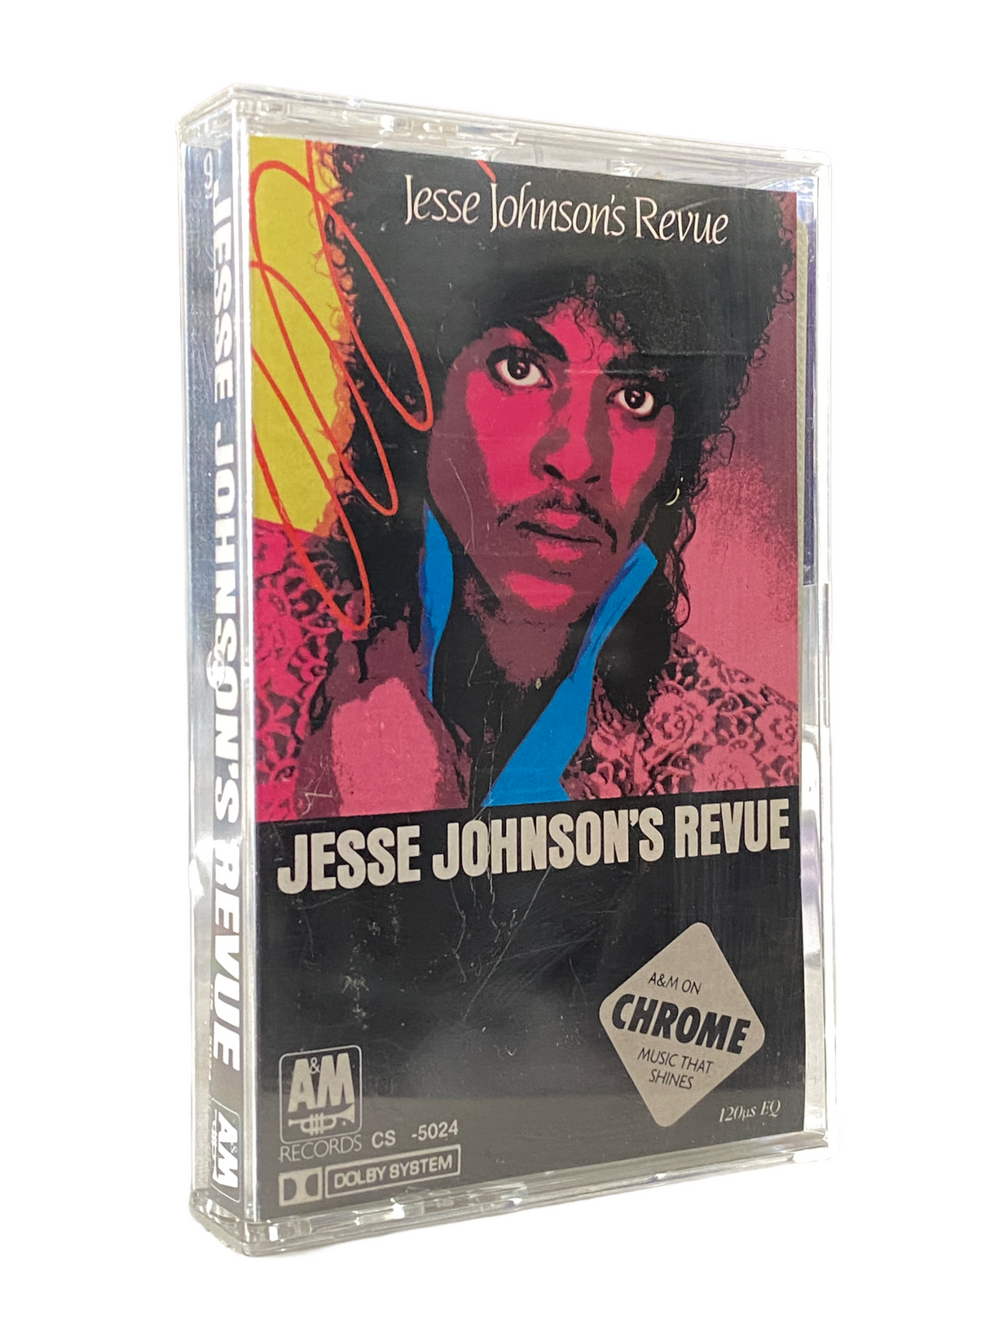 Prince – Jesse Johnson's Revue Self Titled Original Cassette Tape 1985 Release Prince